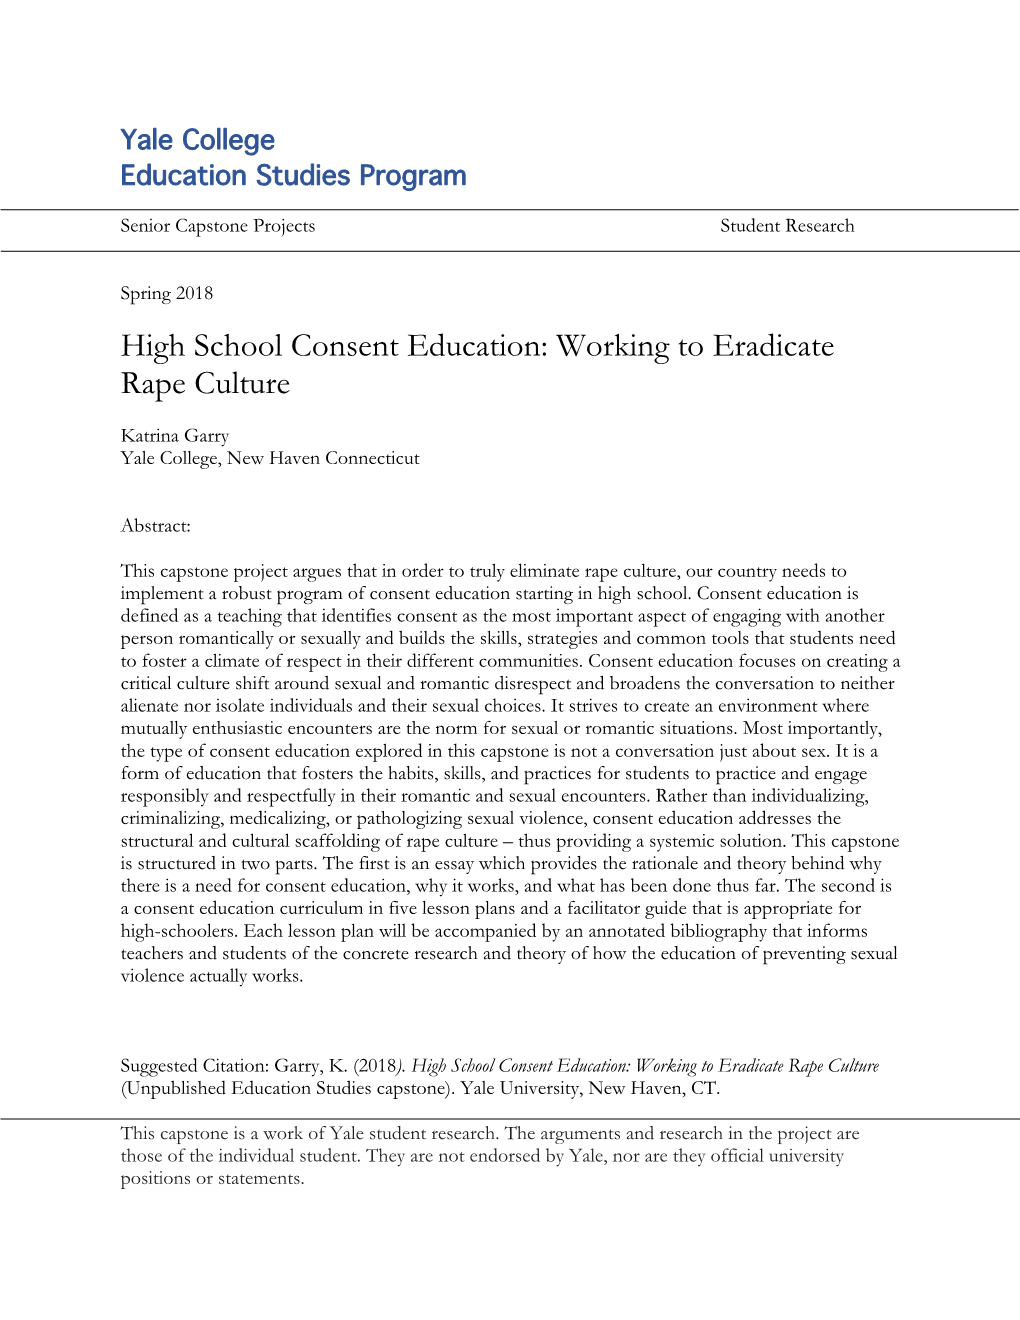 High School Consent Education: Working to Eradicate Rape Culture